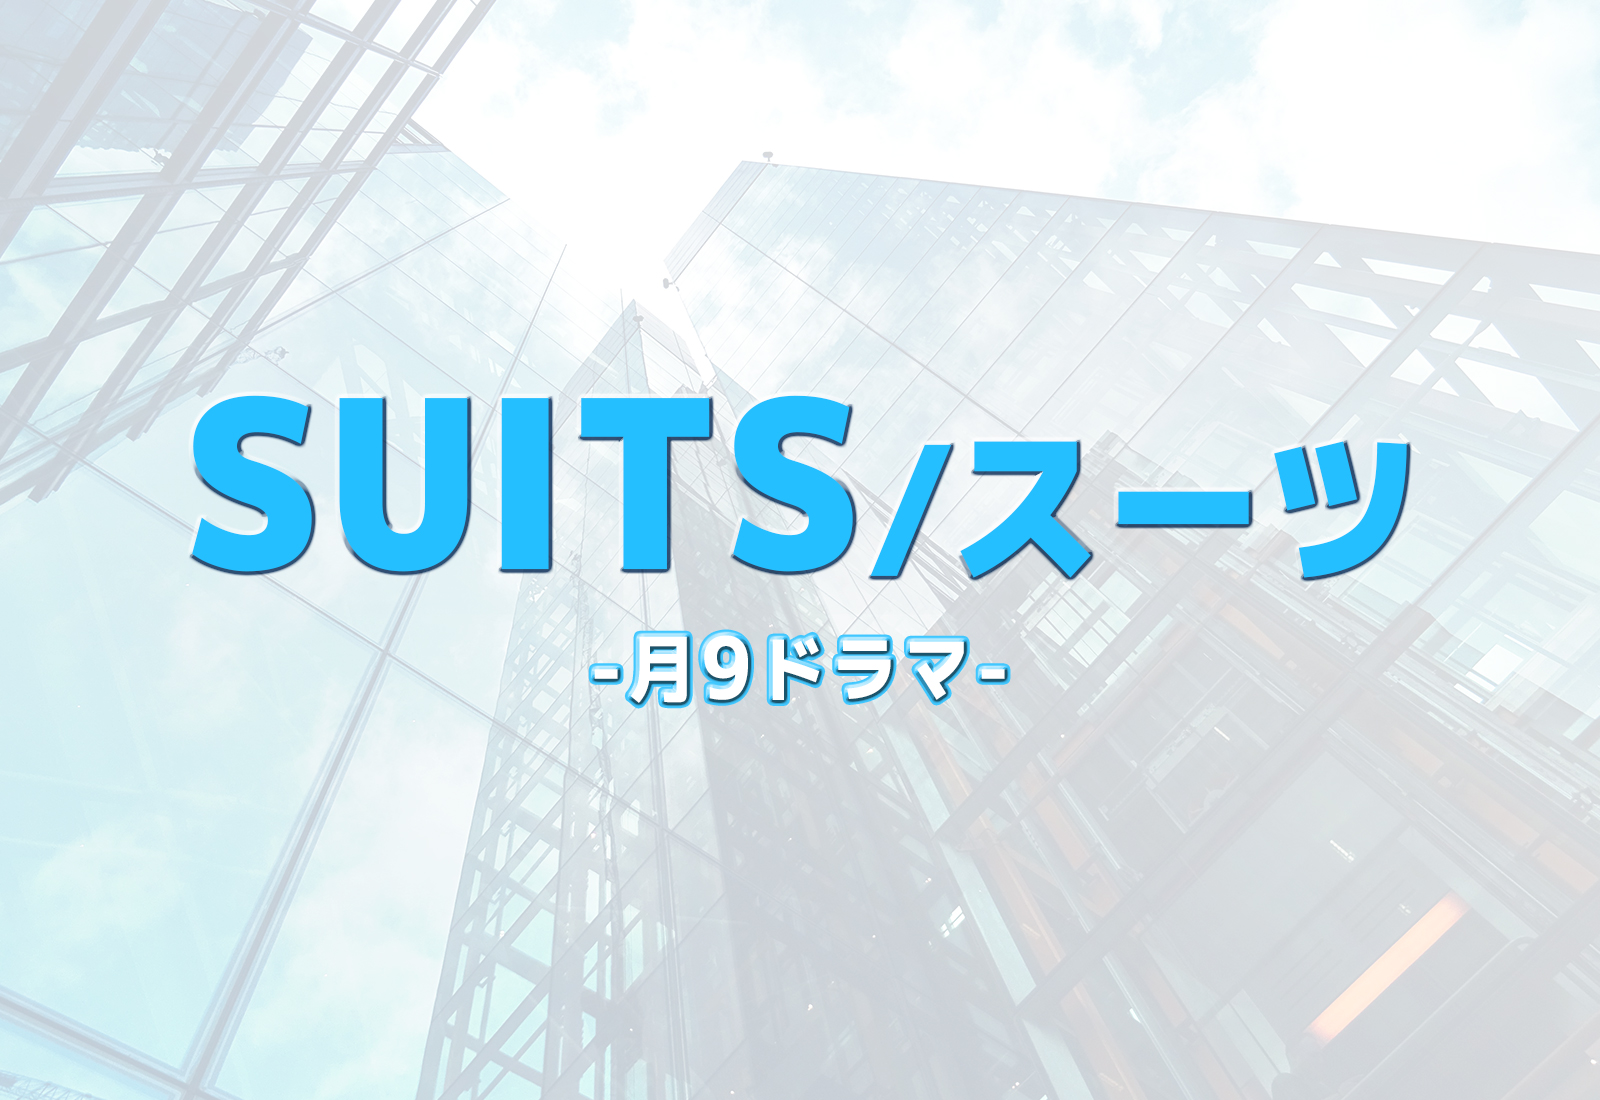 Suits スーツ3話ゲストキャスト 融資担当のハーフの太田緑ロランスやmegumiなど